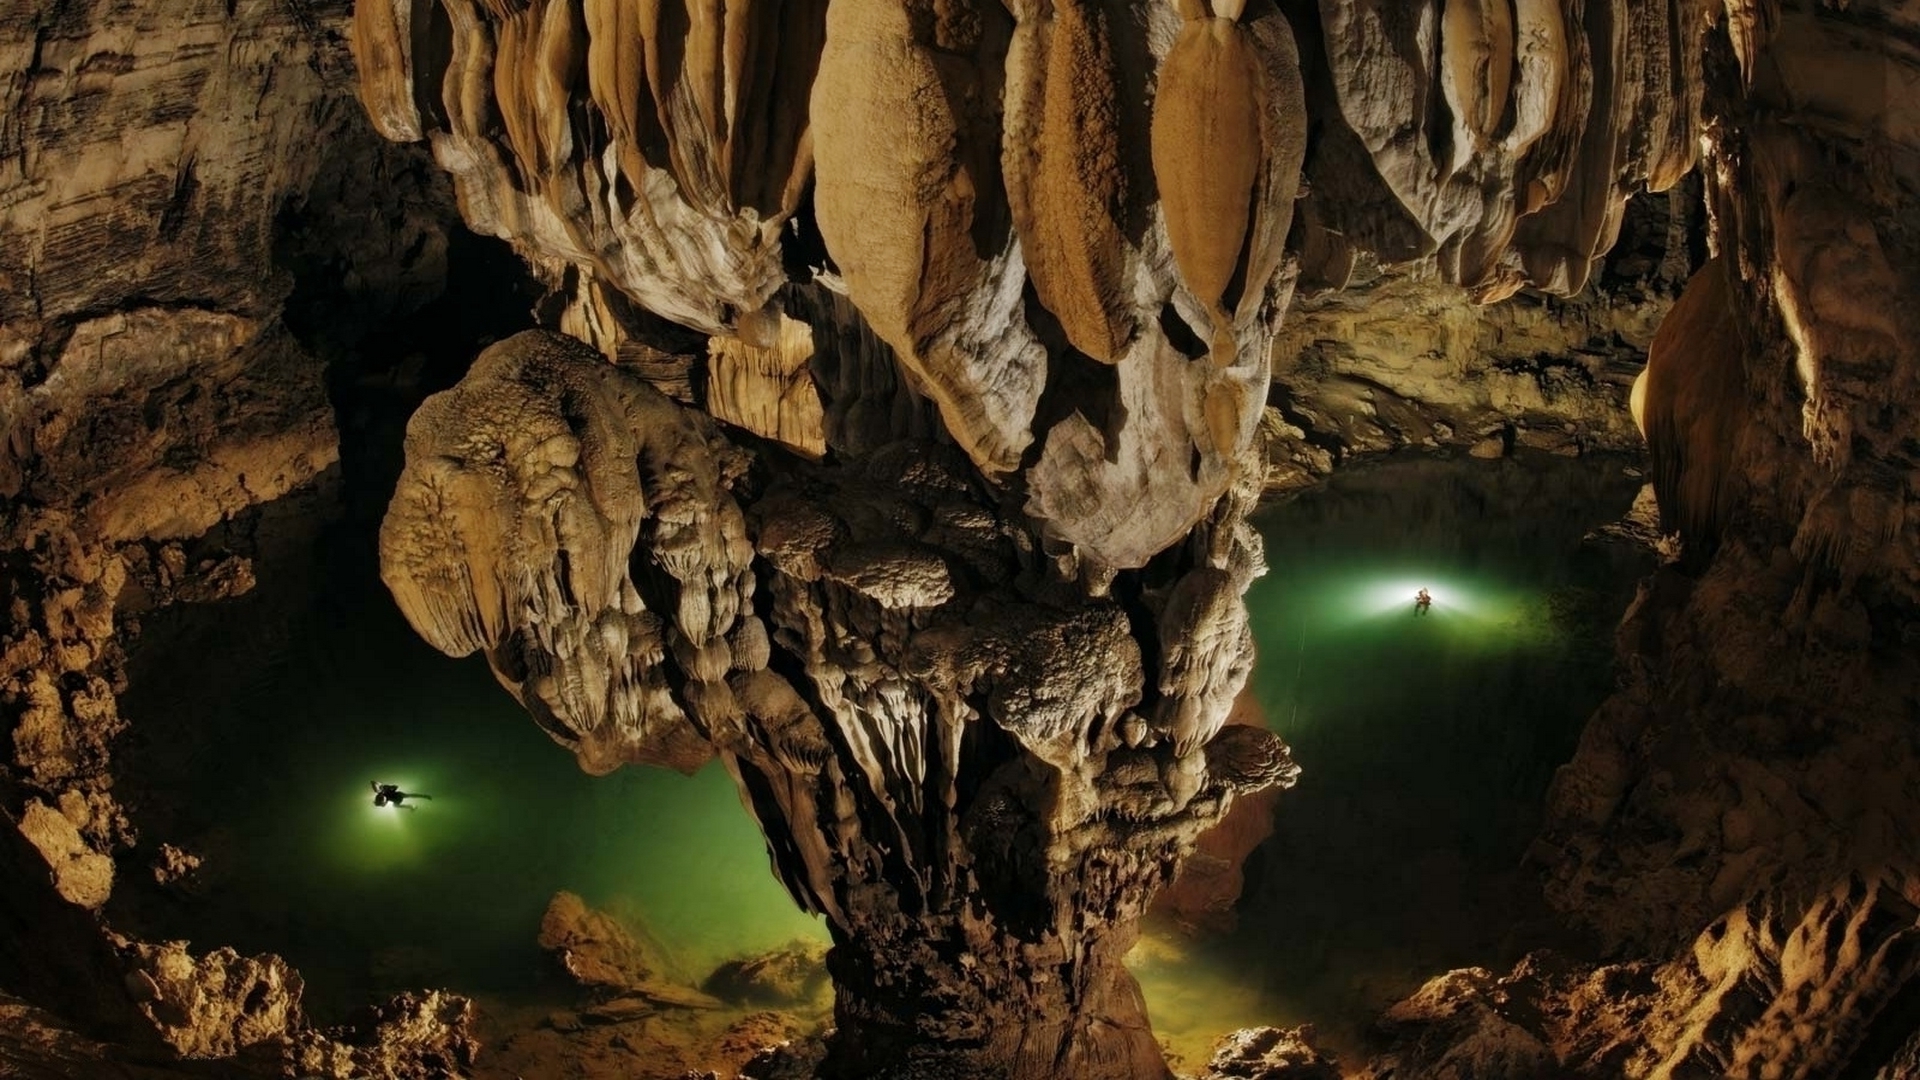 Пещера кашкулакская